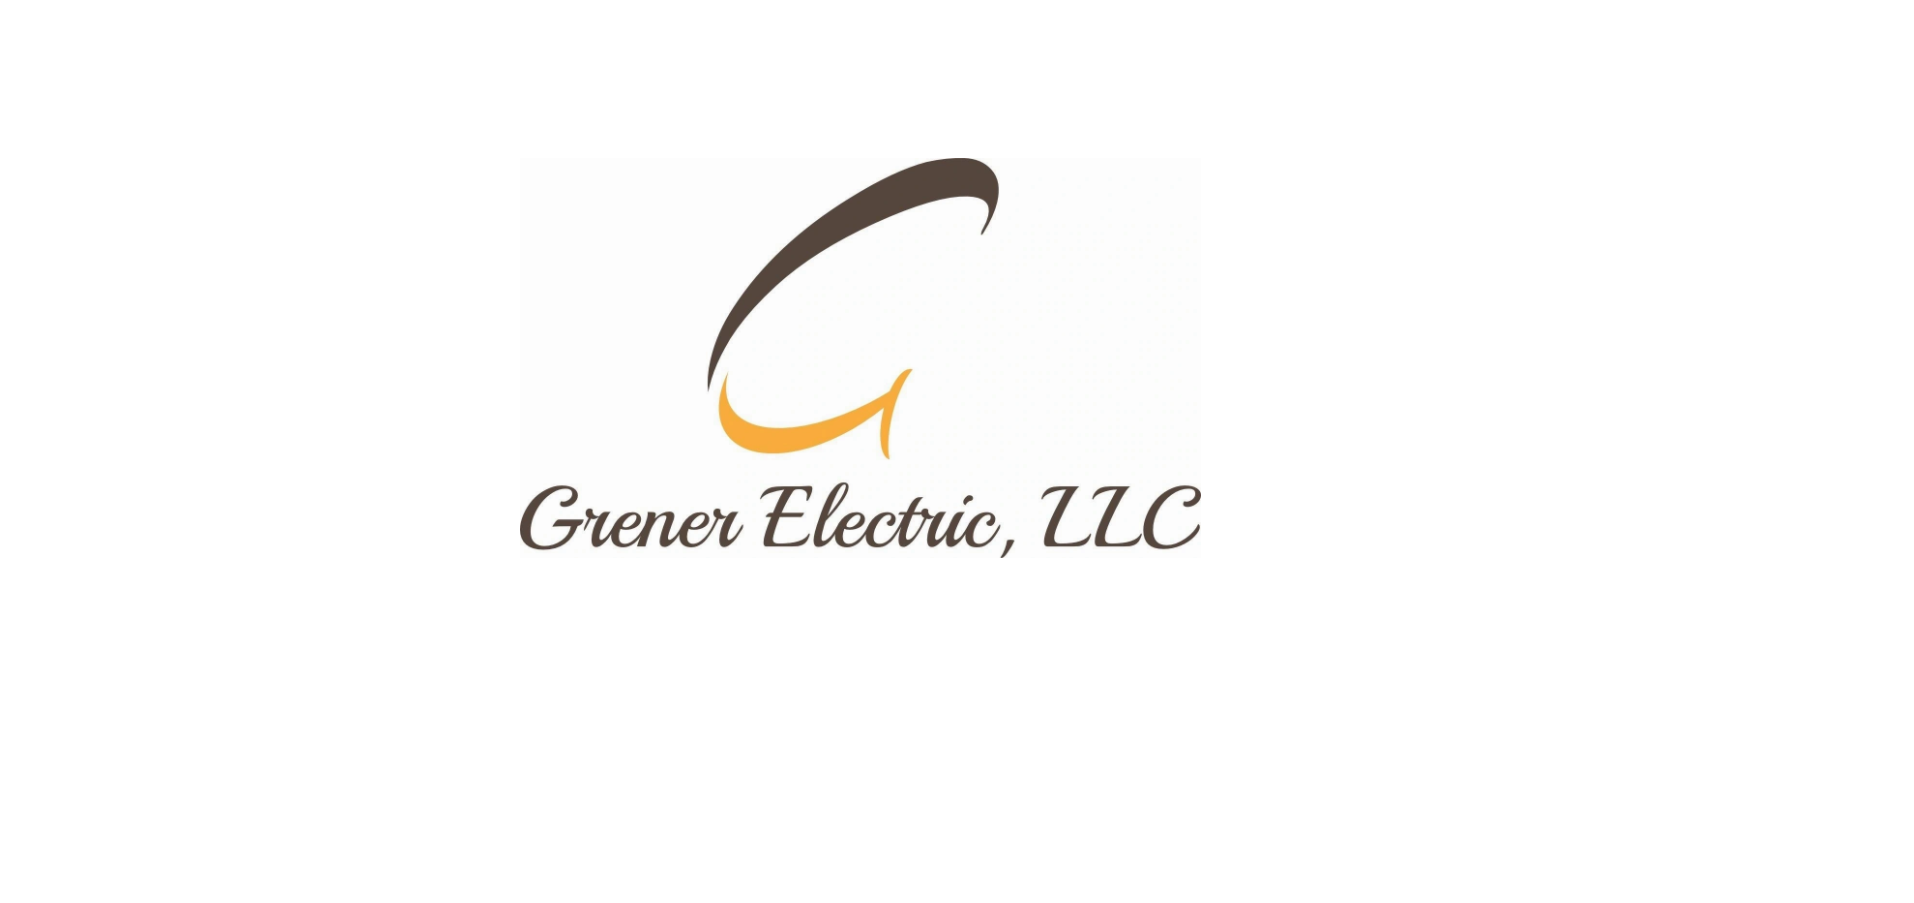 Grener Electric, LLC